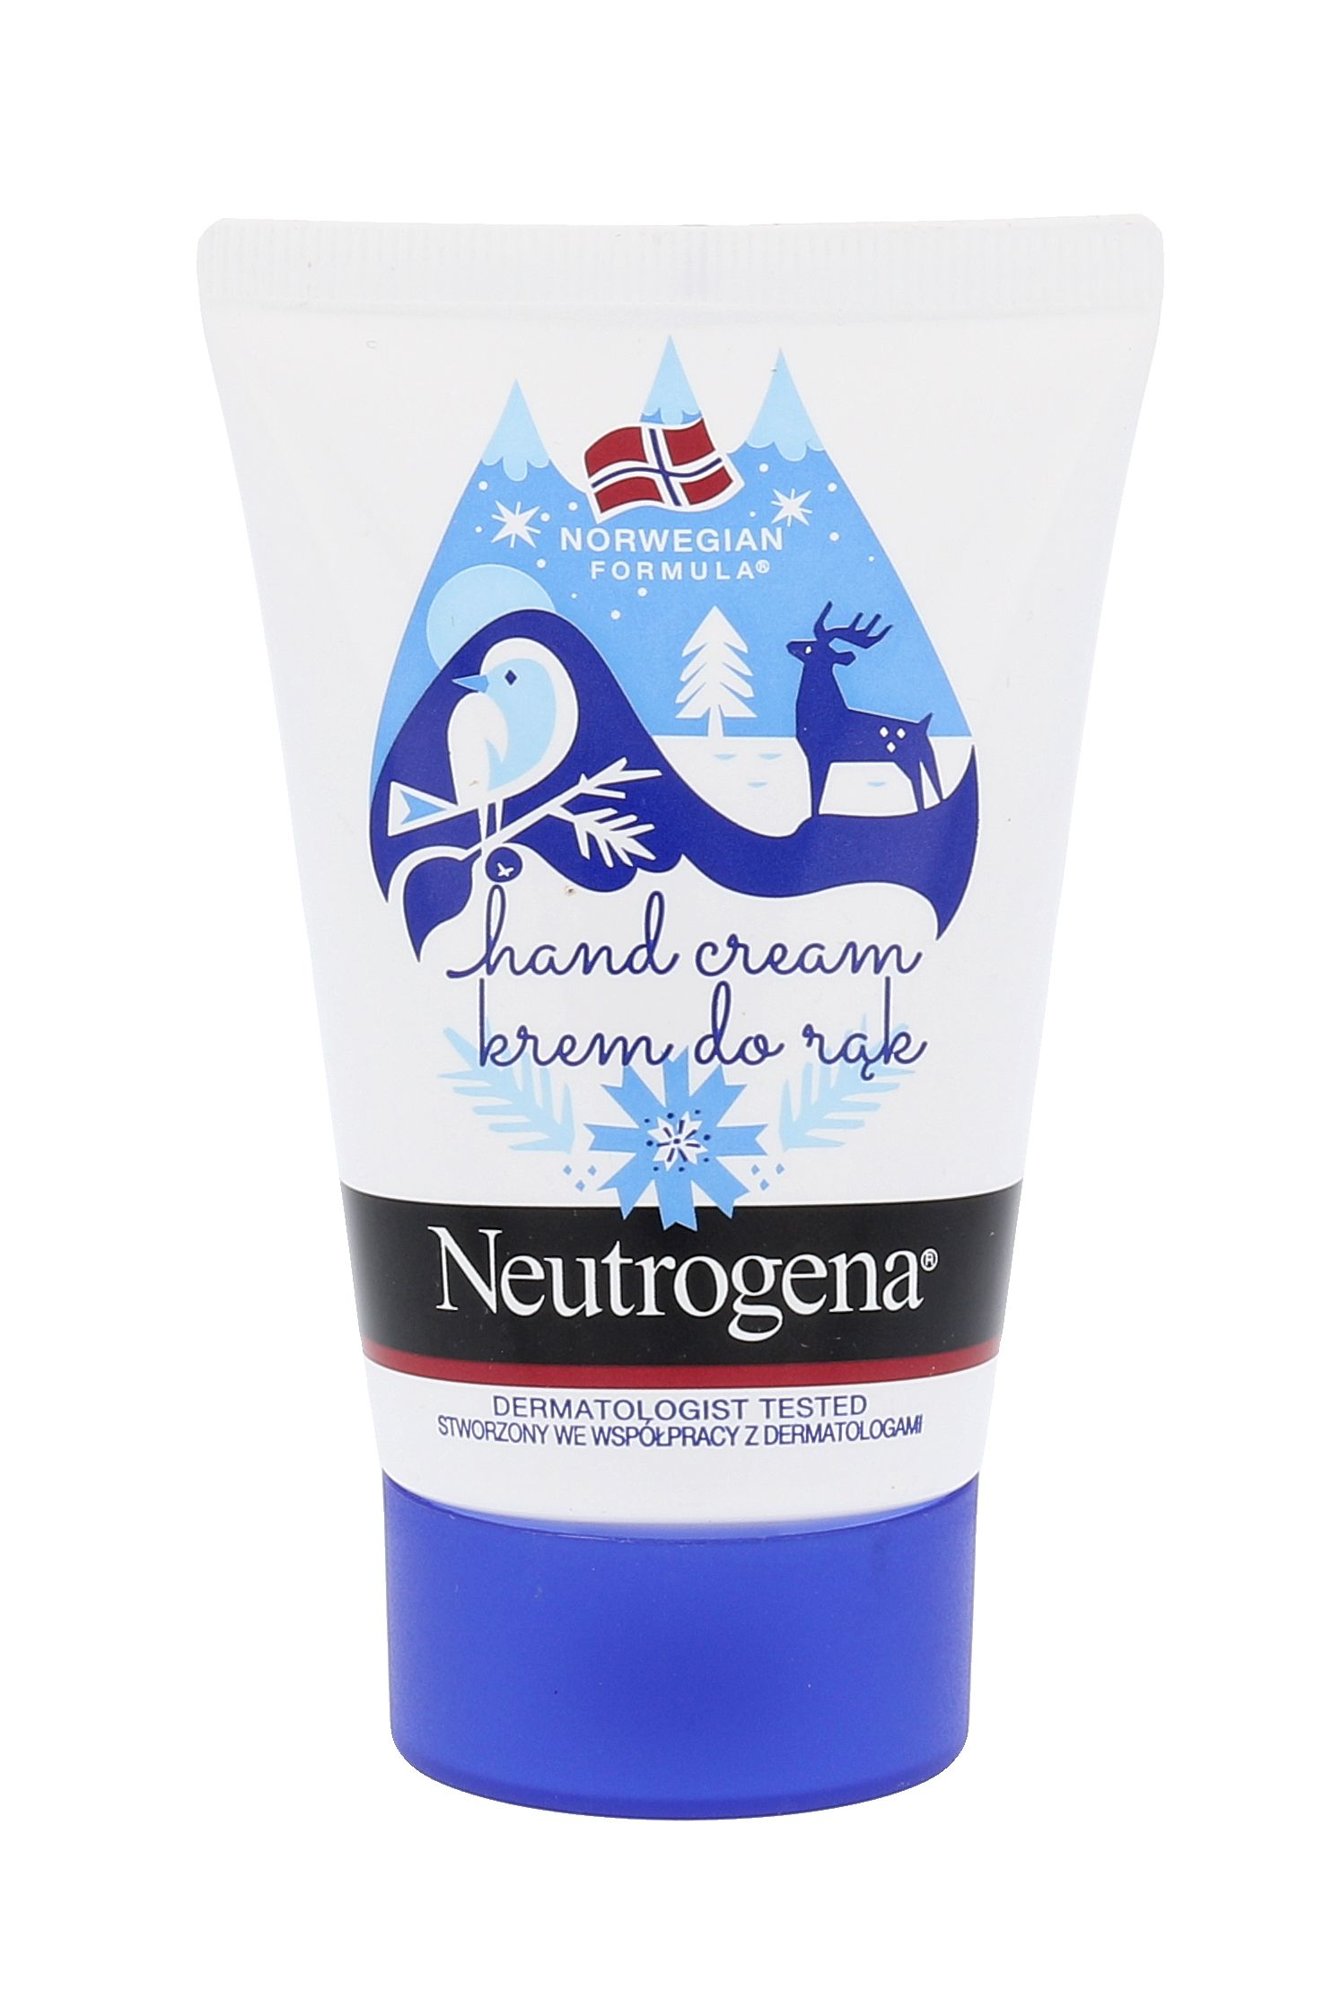 Neutrogena Scented Hand Cream Darling Clementine Edition